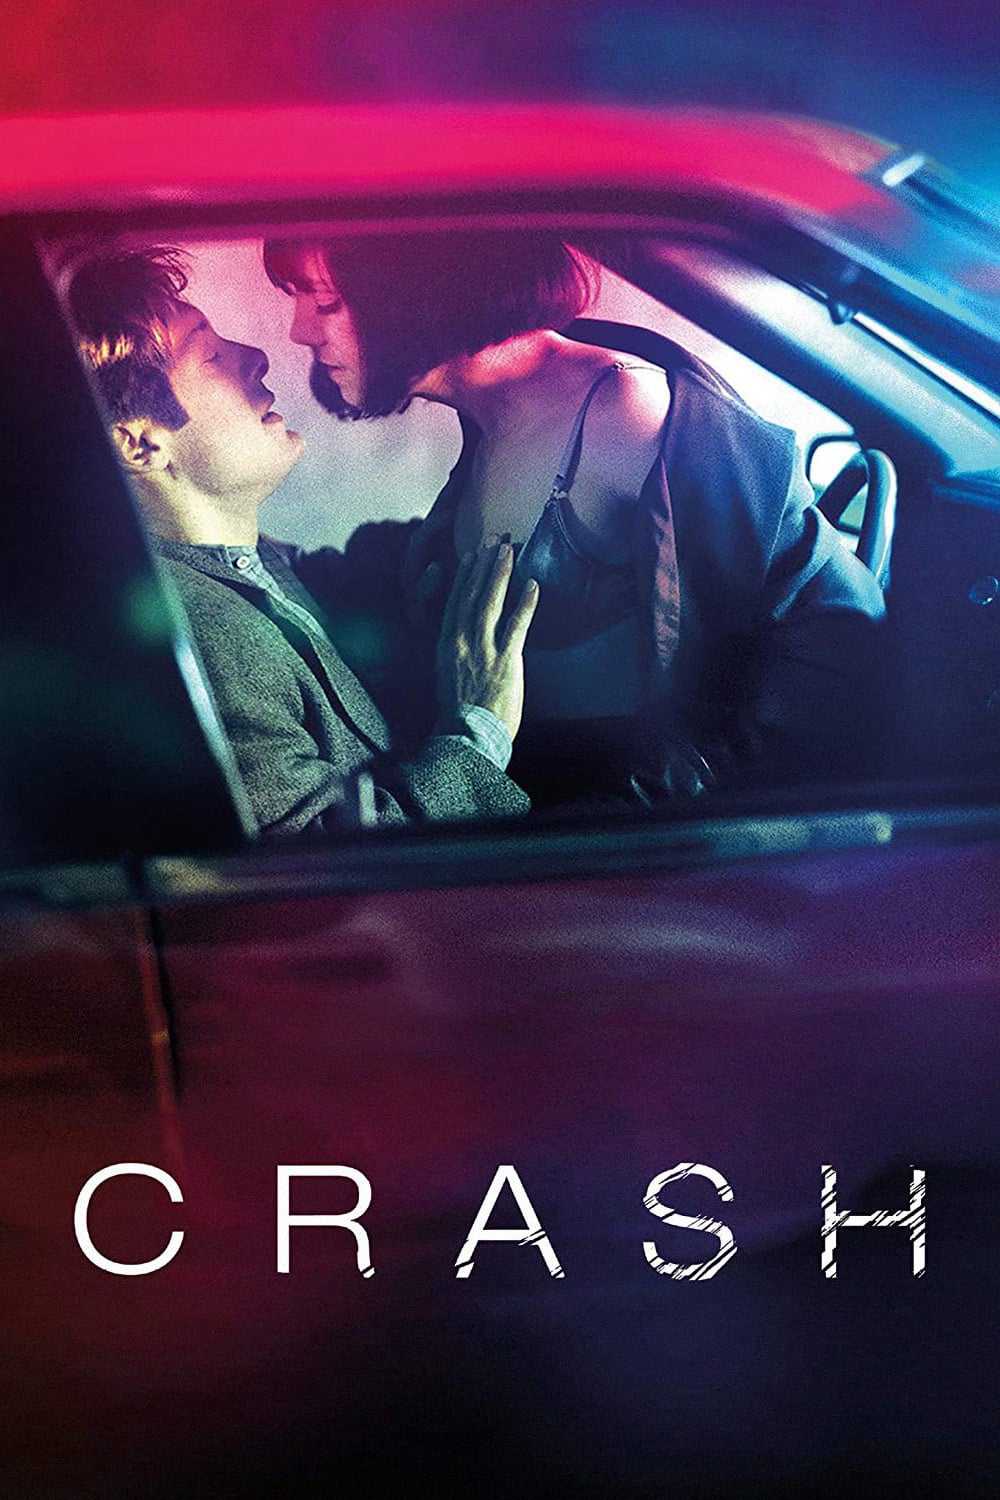 Crash - Crash